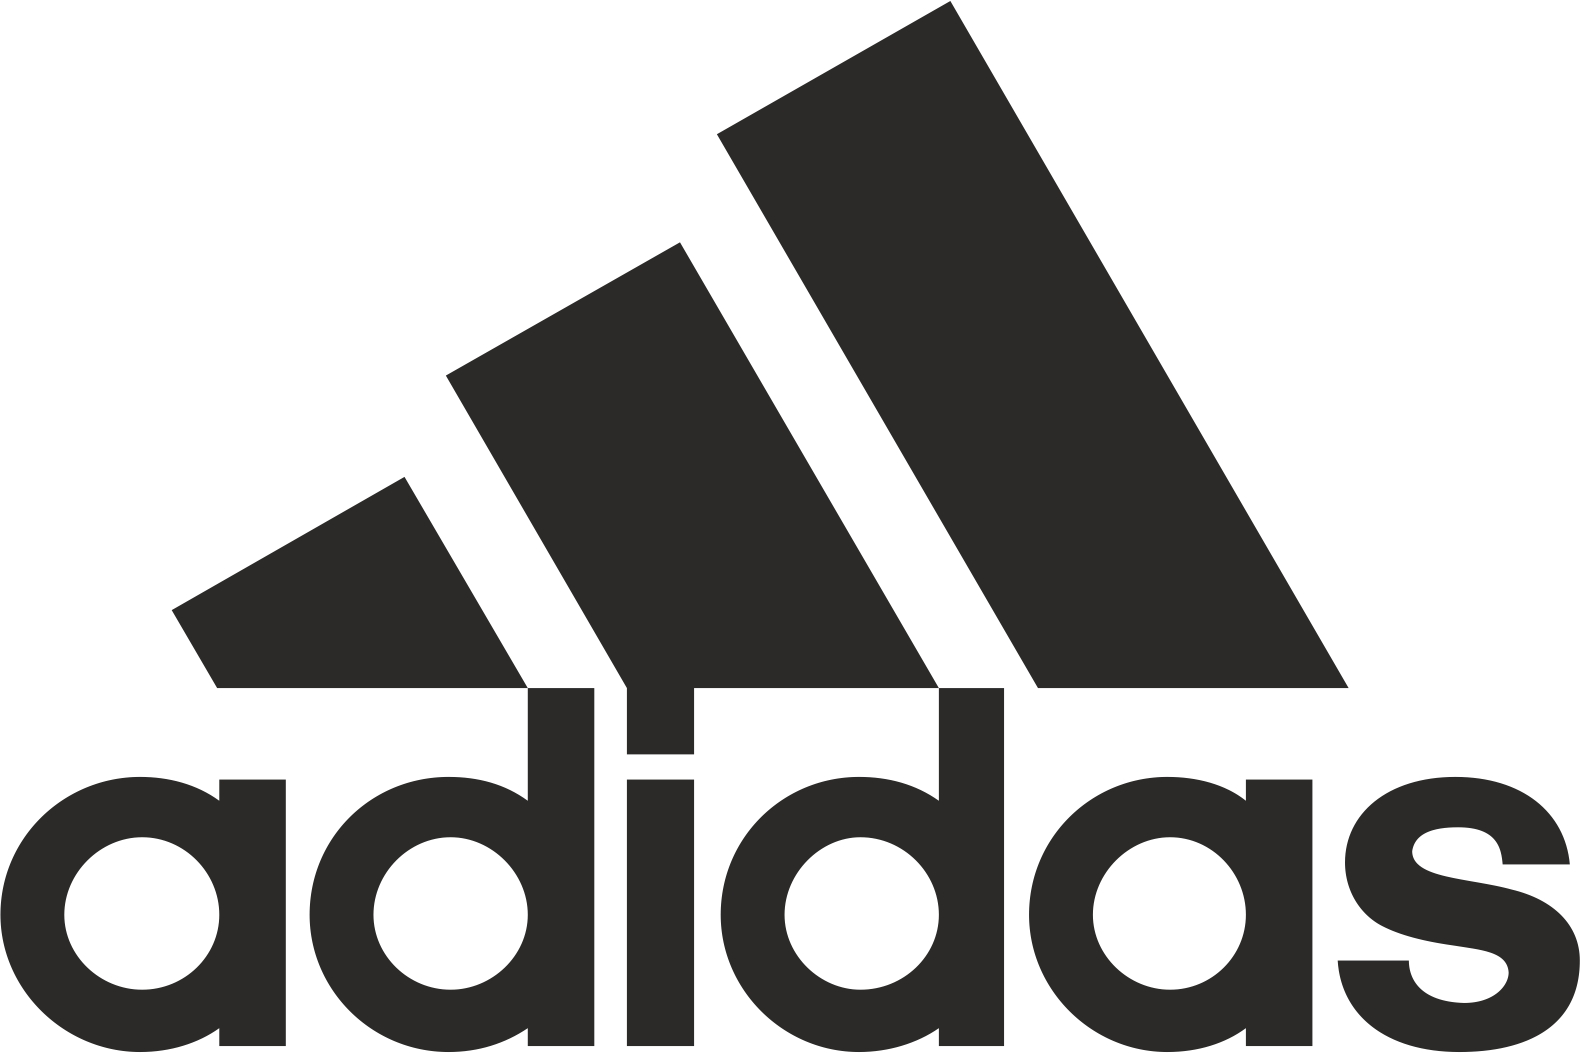 DesignerOutletLuxembourg_Logo_Adidas.jpg